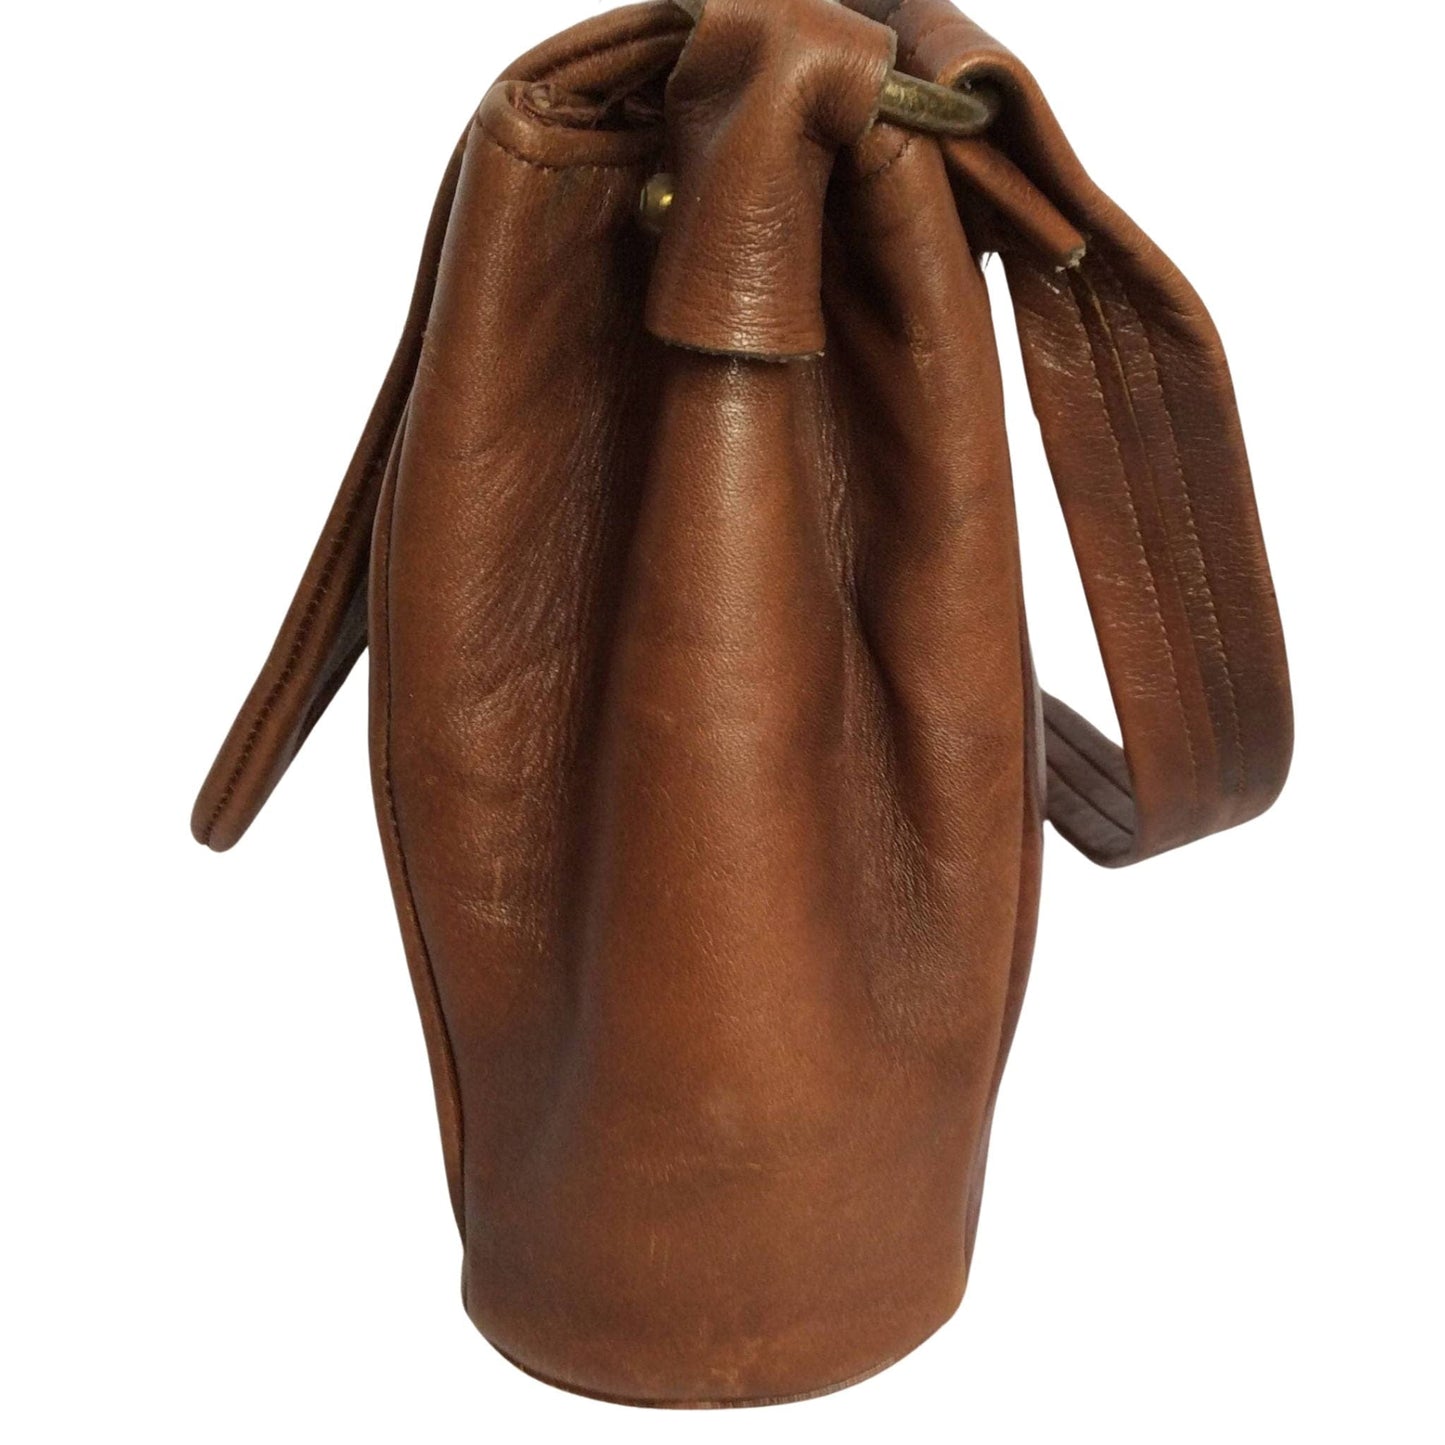 Justin Boots Leather Bag Medium / Brown / Vintage 1980s